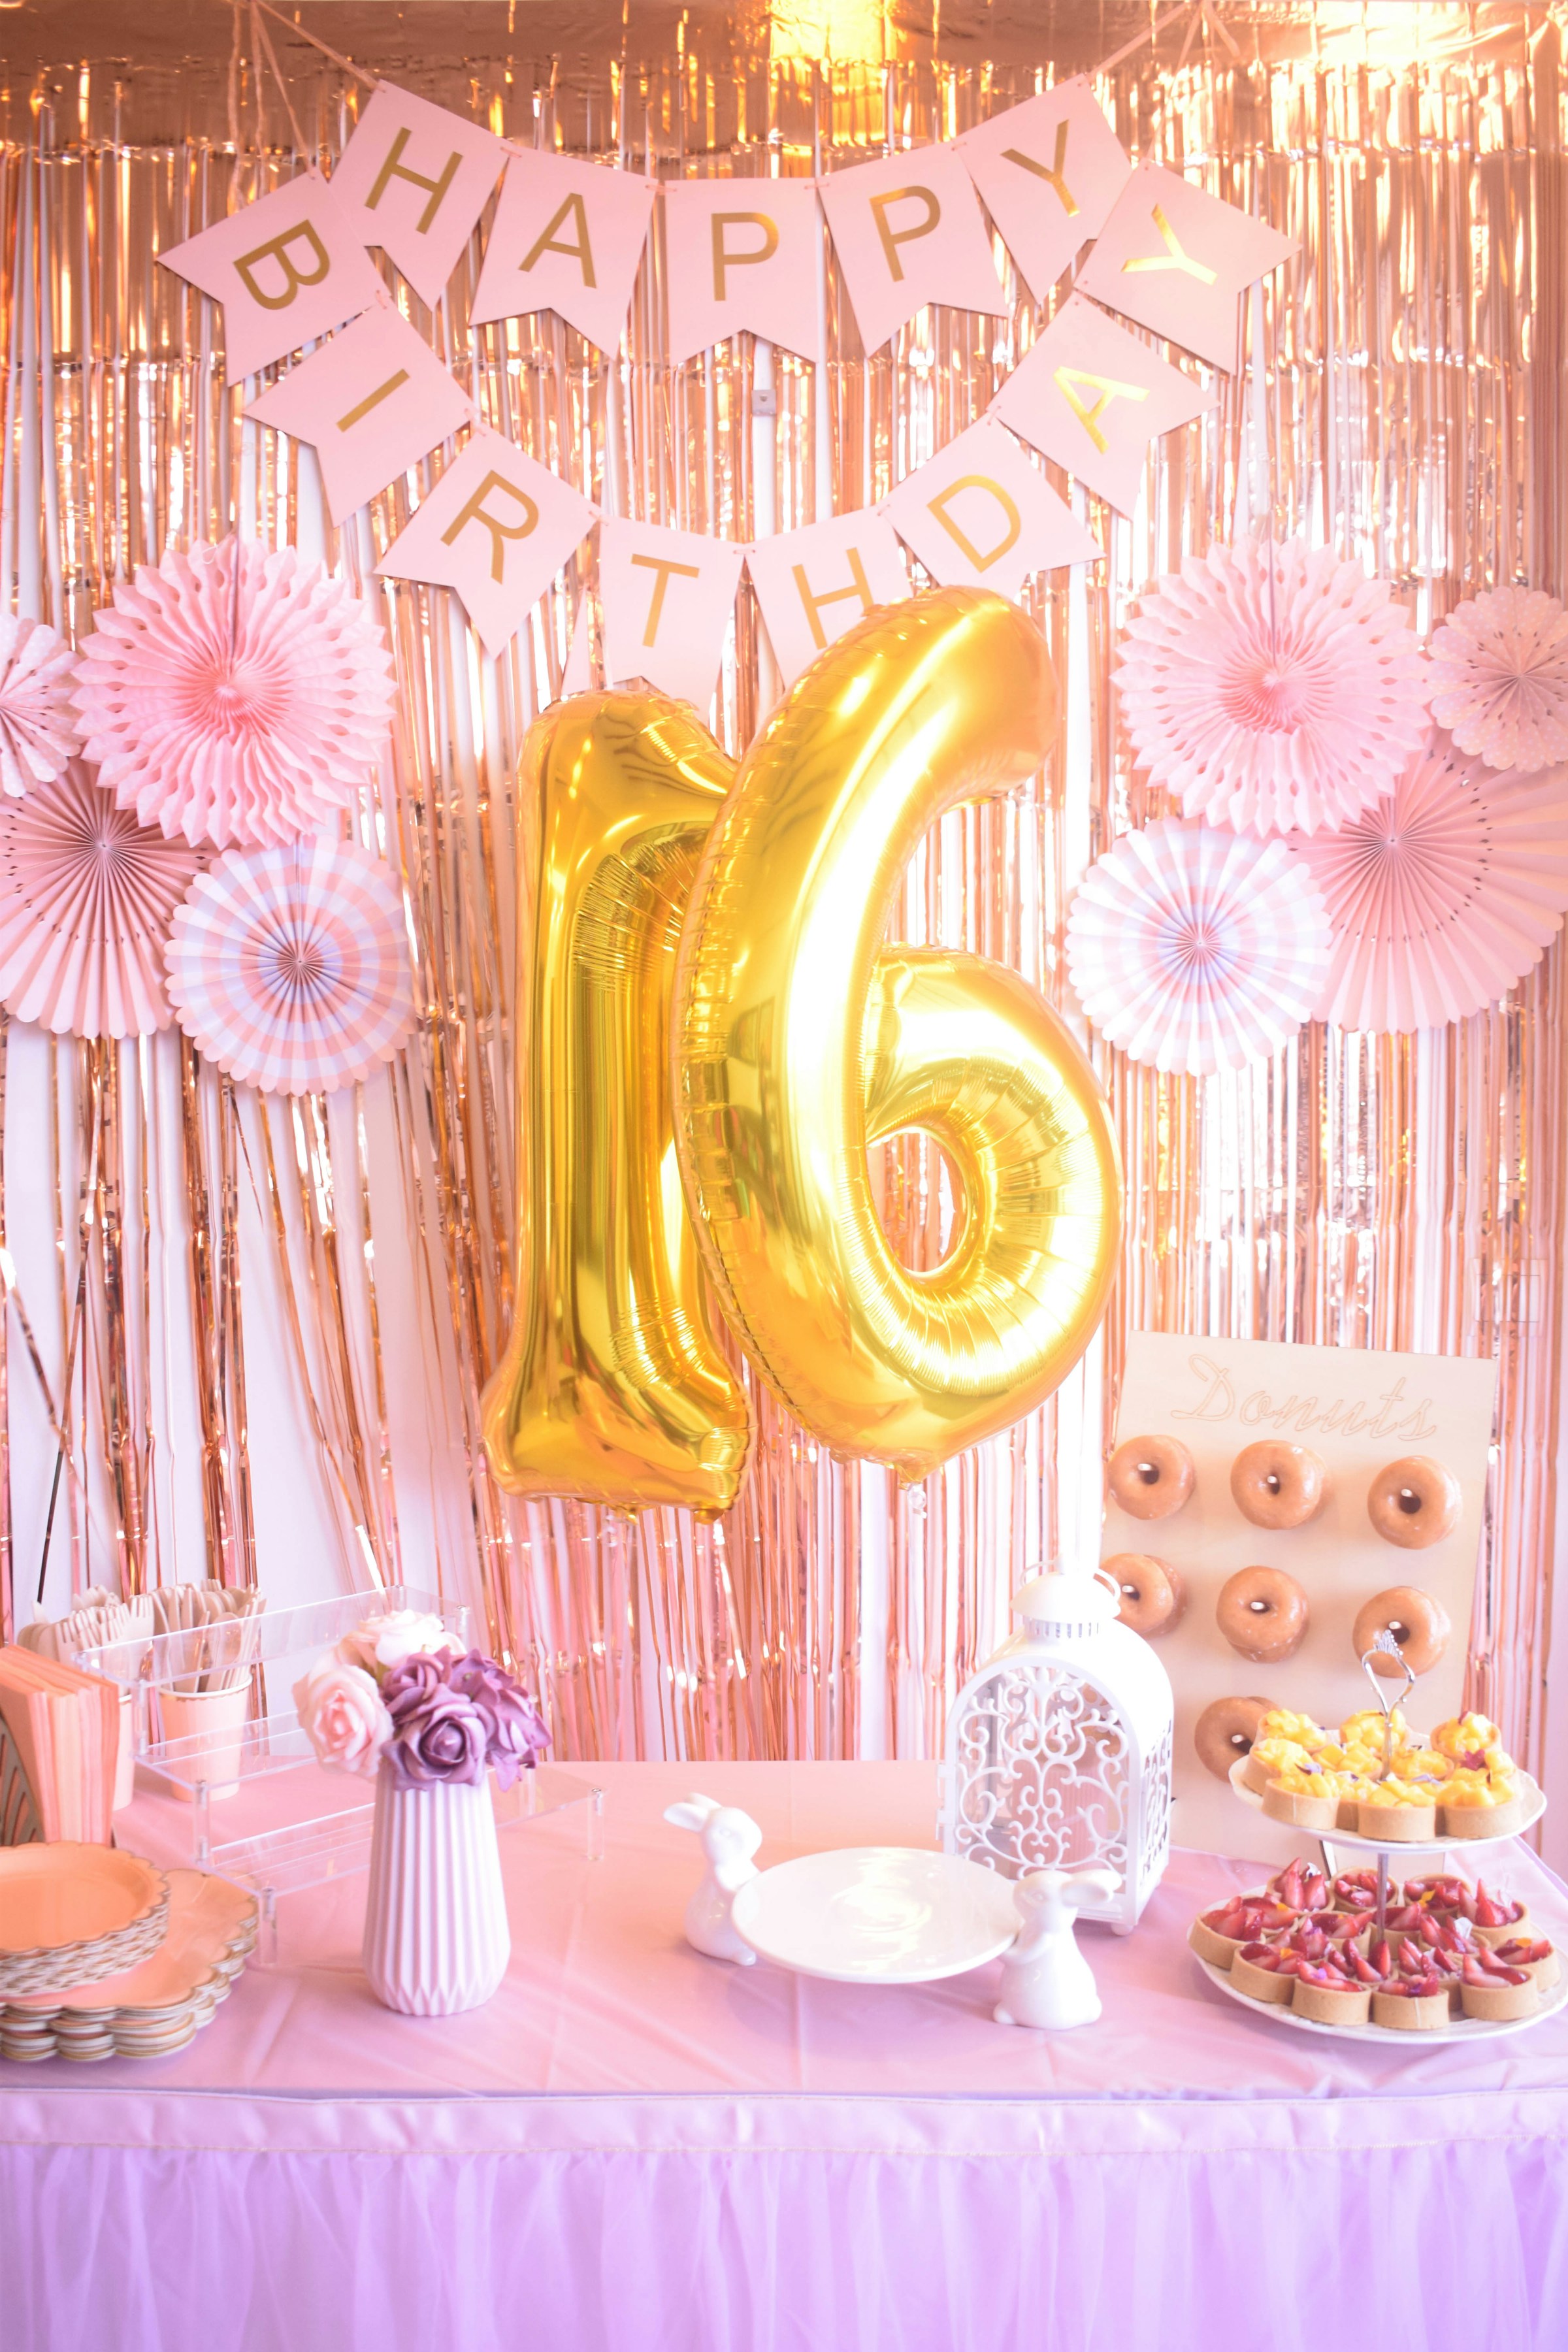 A sweet sixteen birthday set up | Source: Unsplash